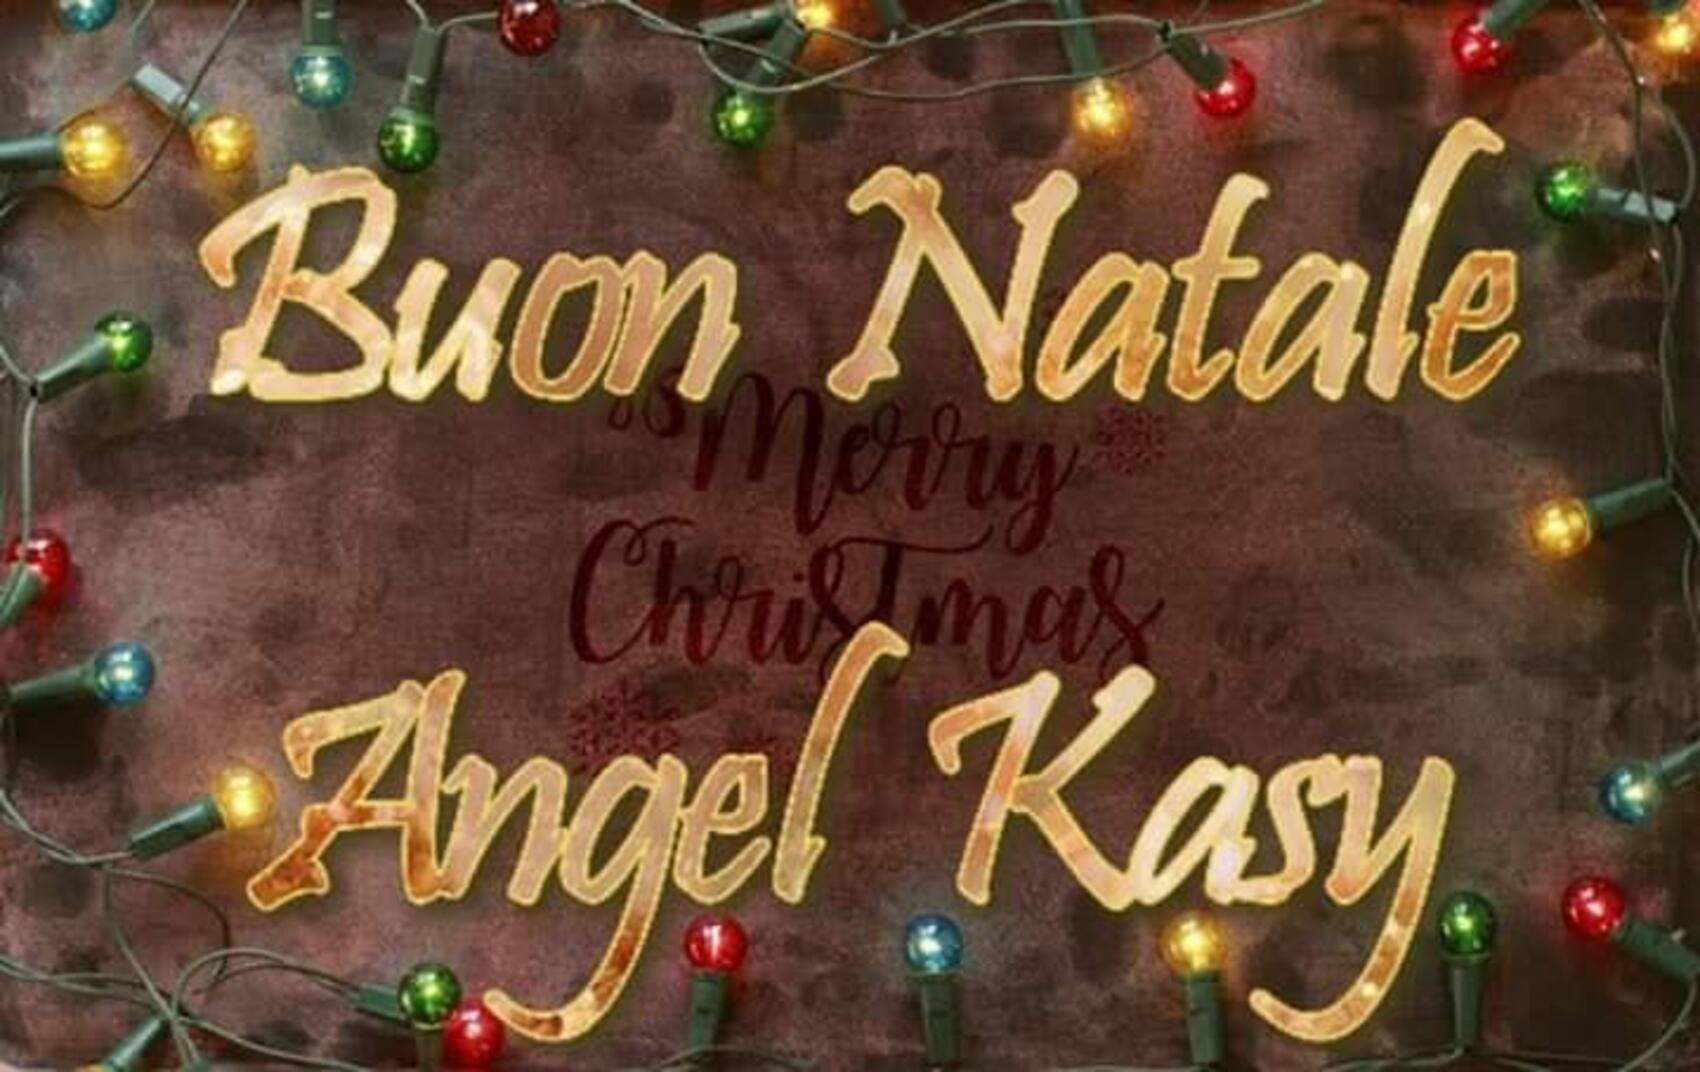 Buon Natale Angel Kasy